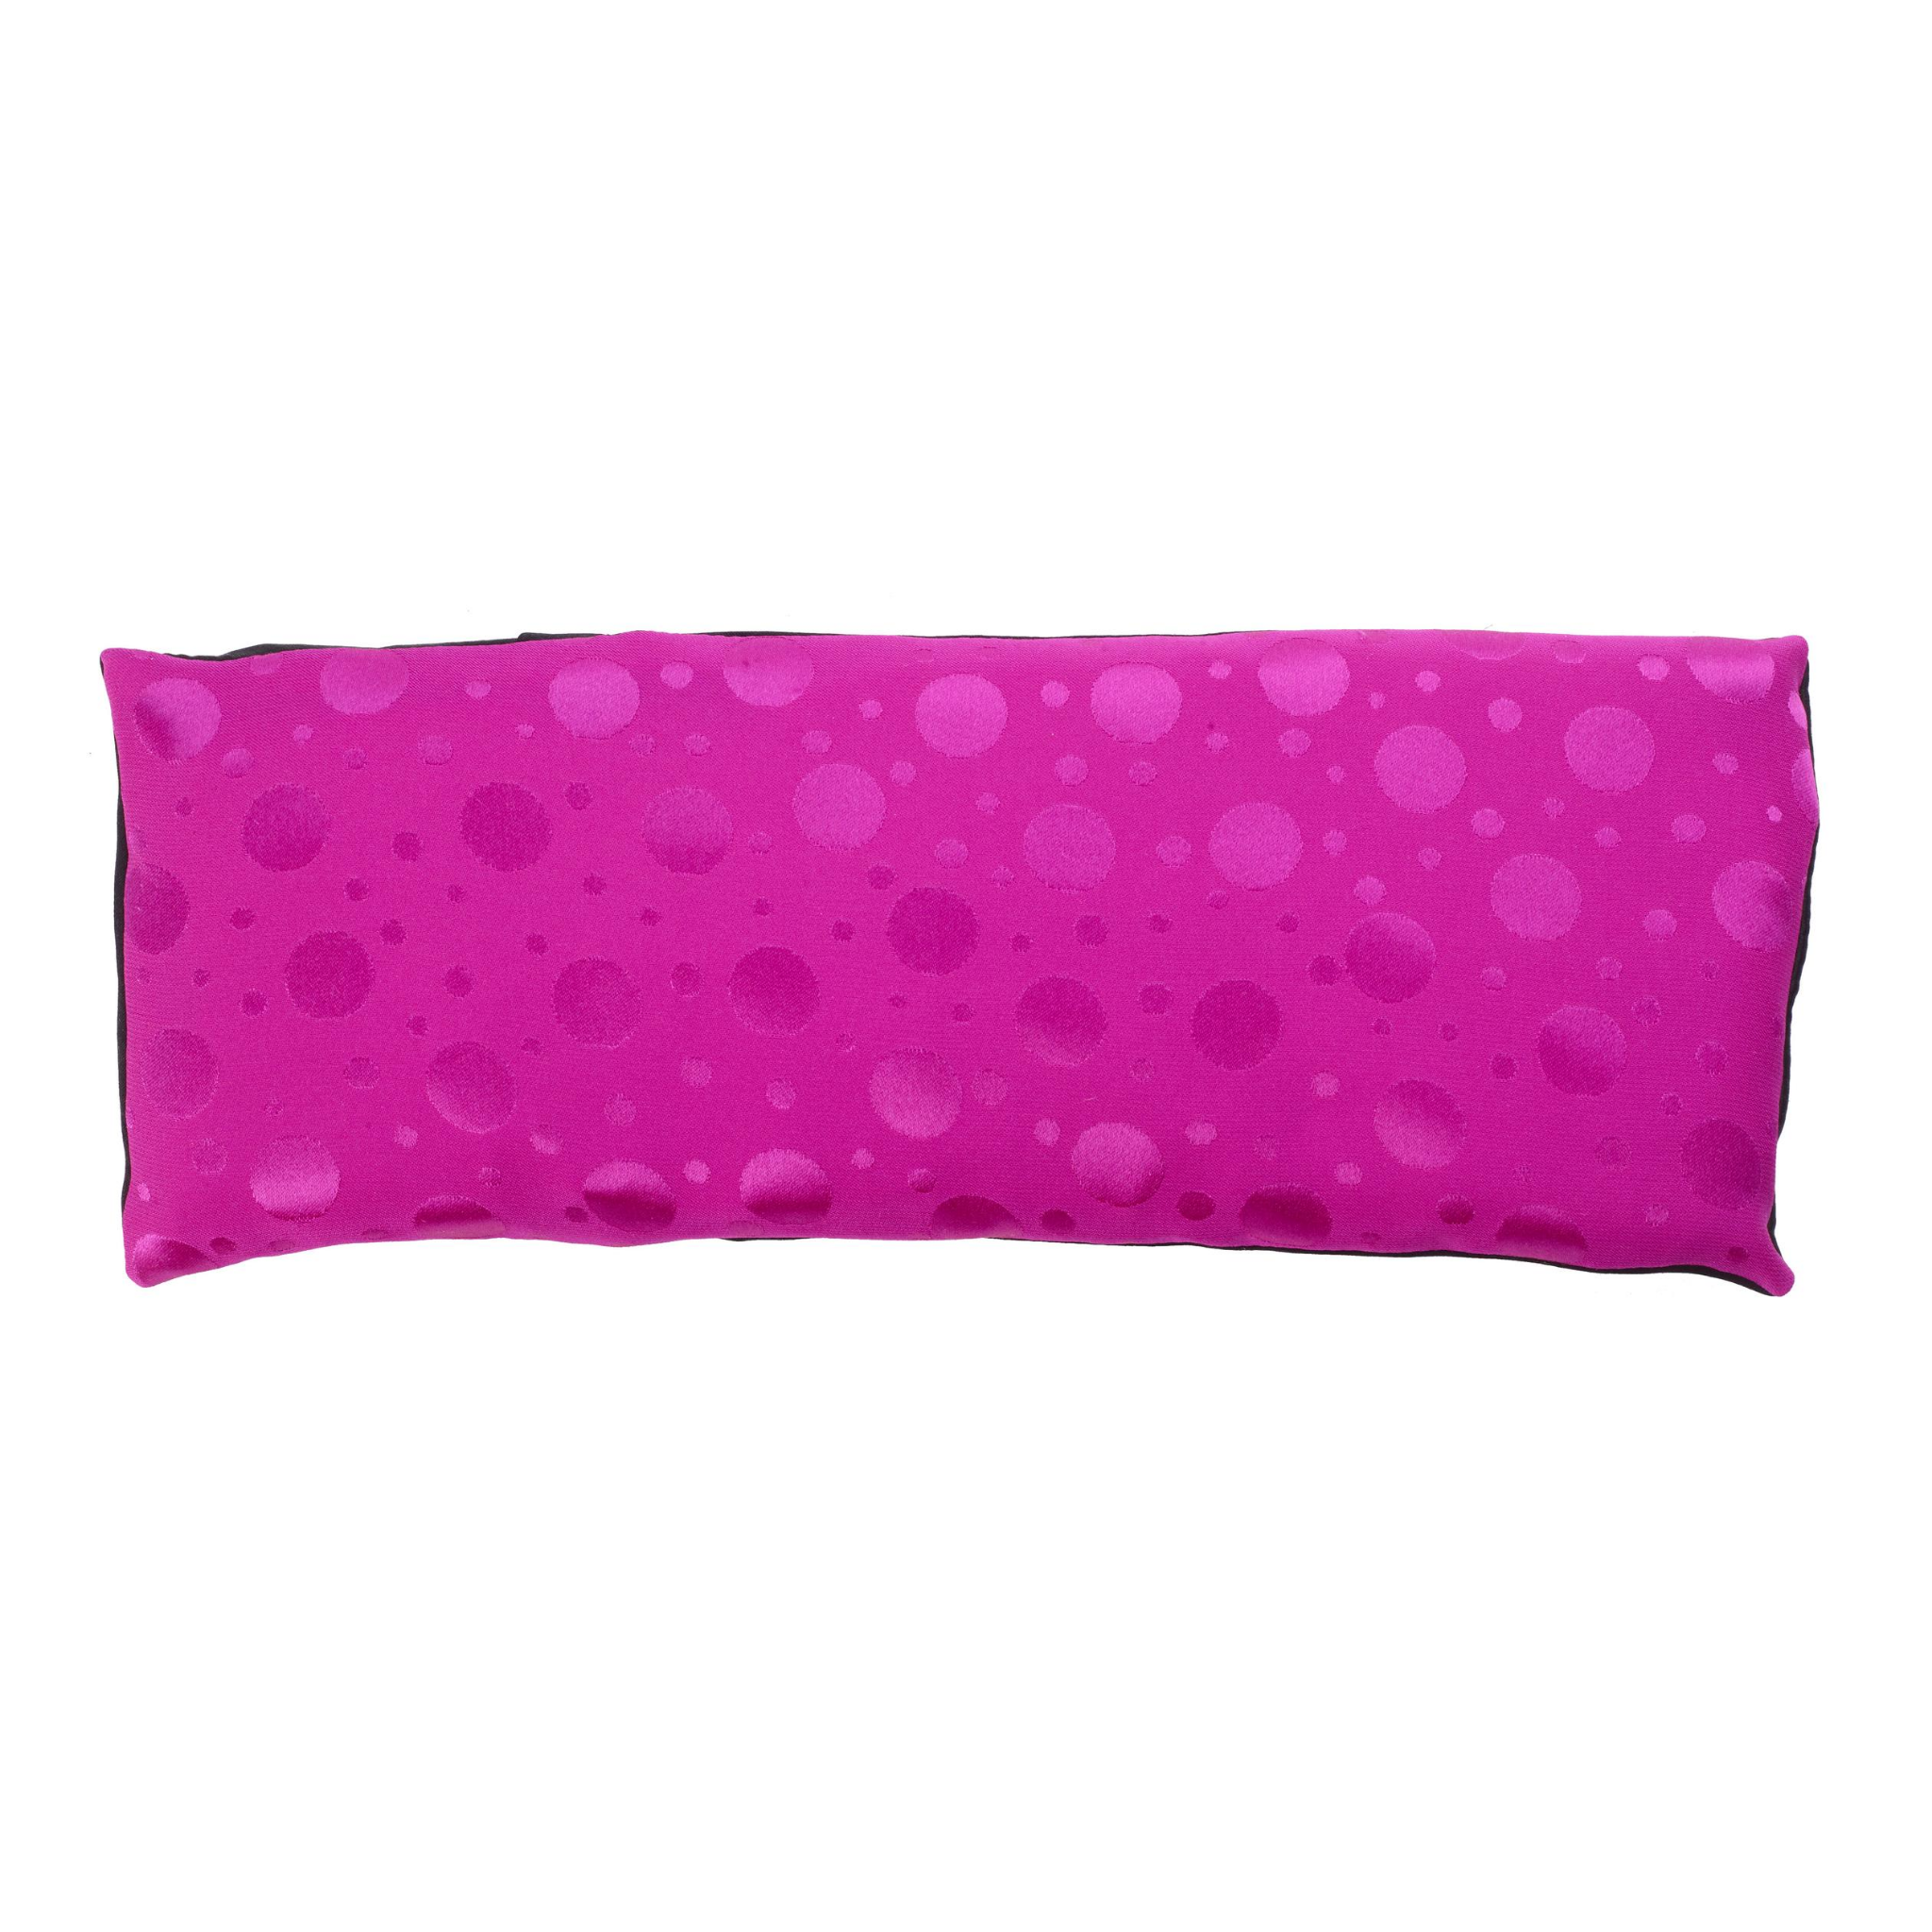 Passionately Pink Eye Pillow